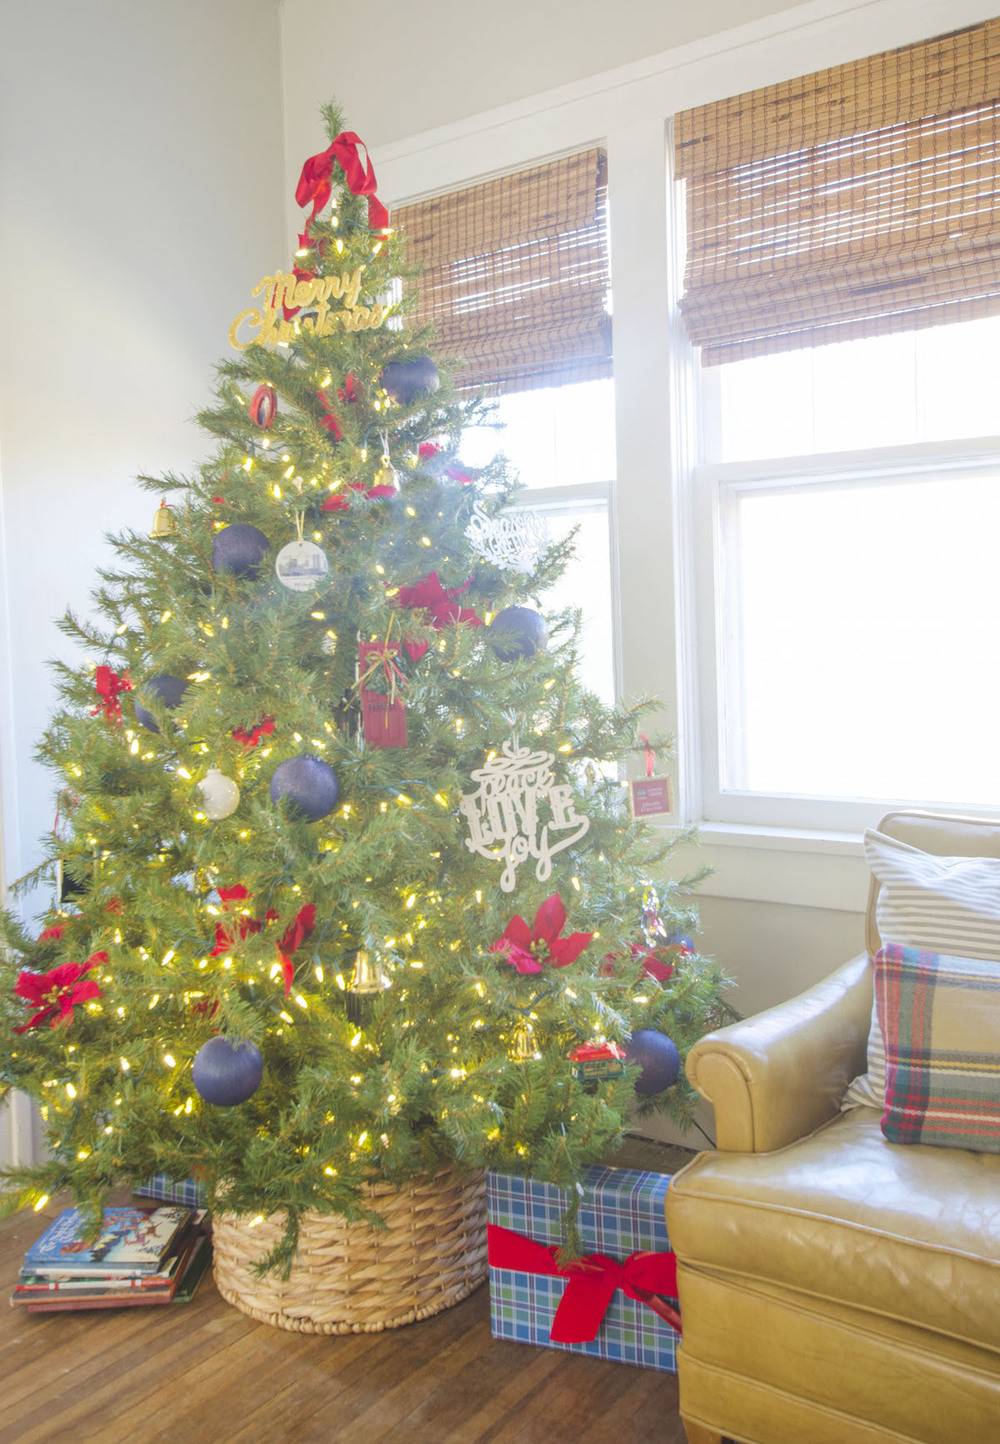 Turn a Storage Basket Into a Christmas Tree Skirt